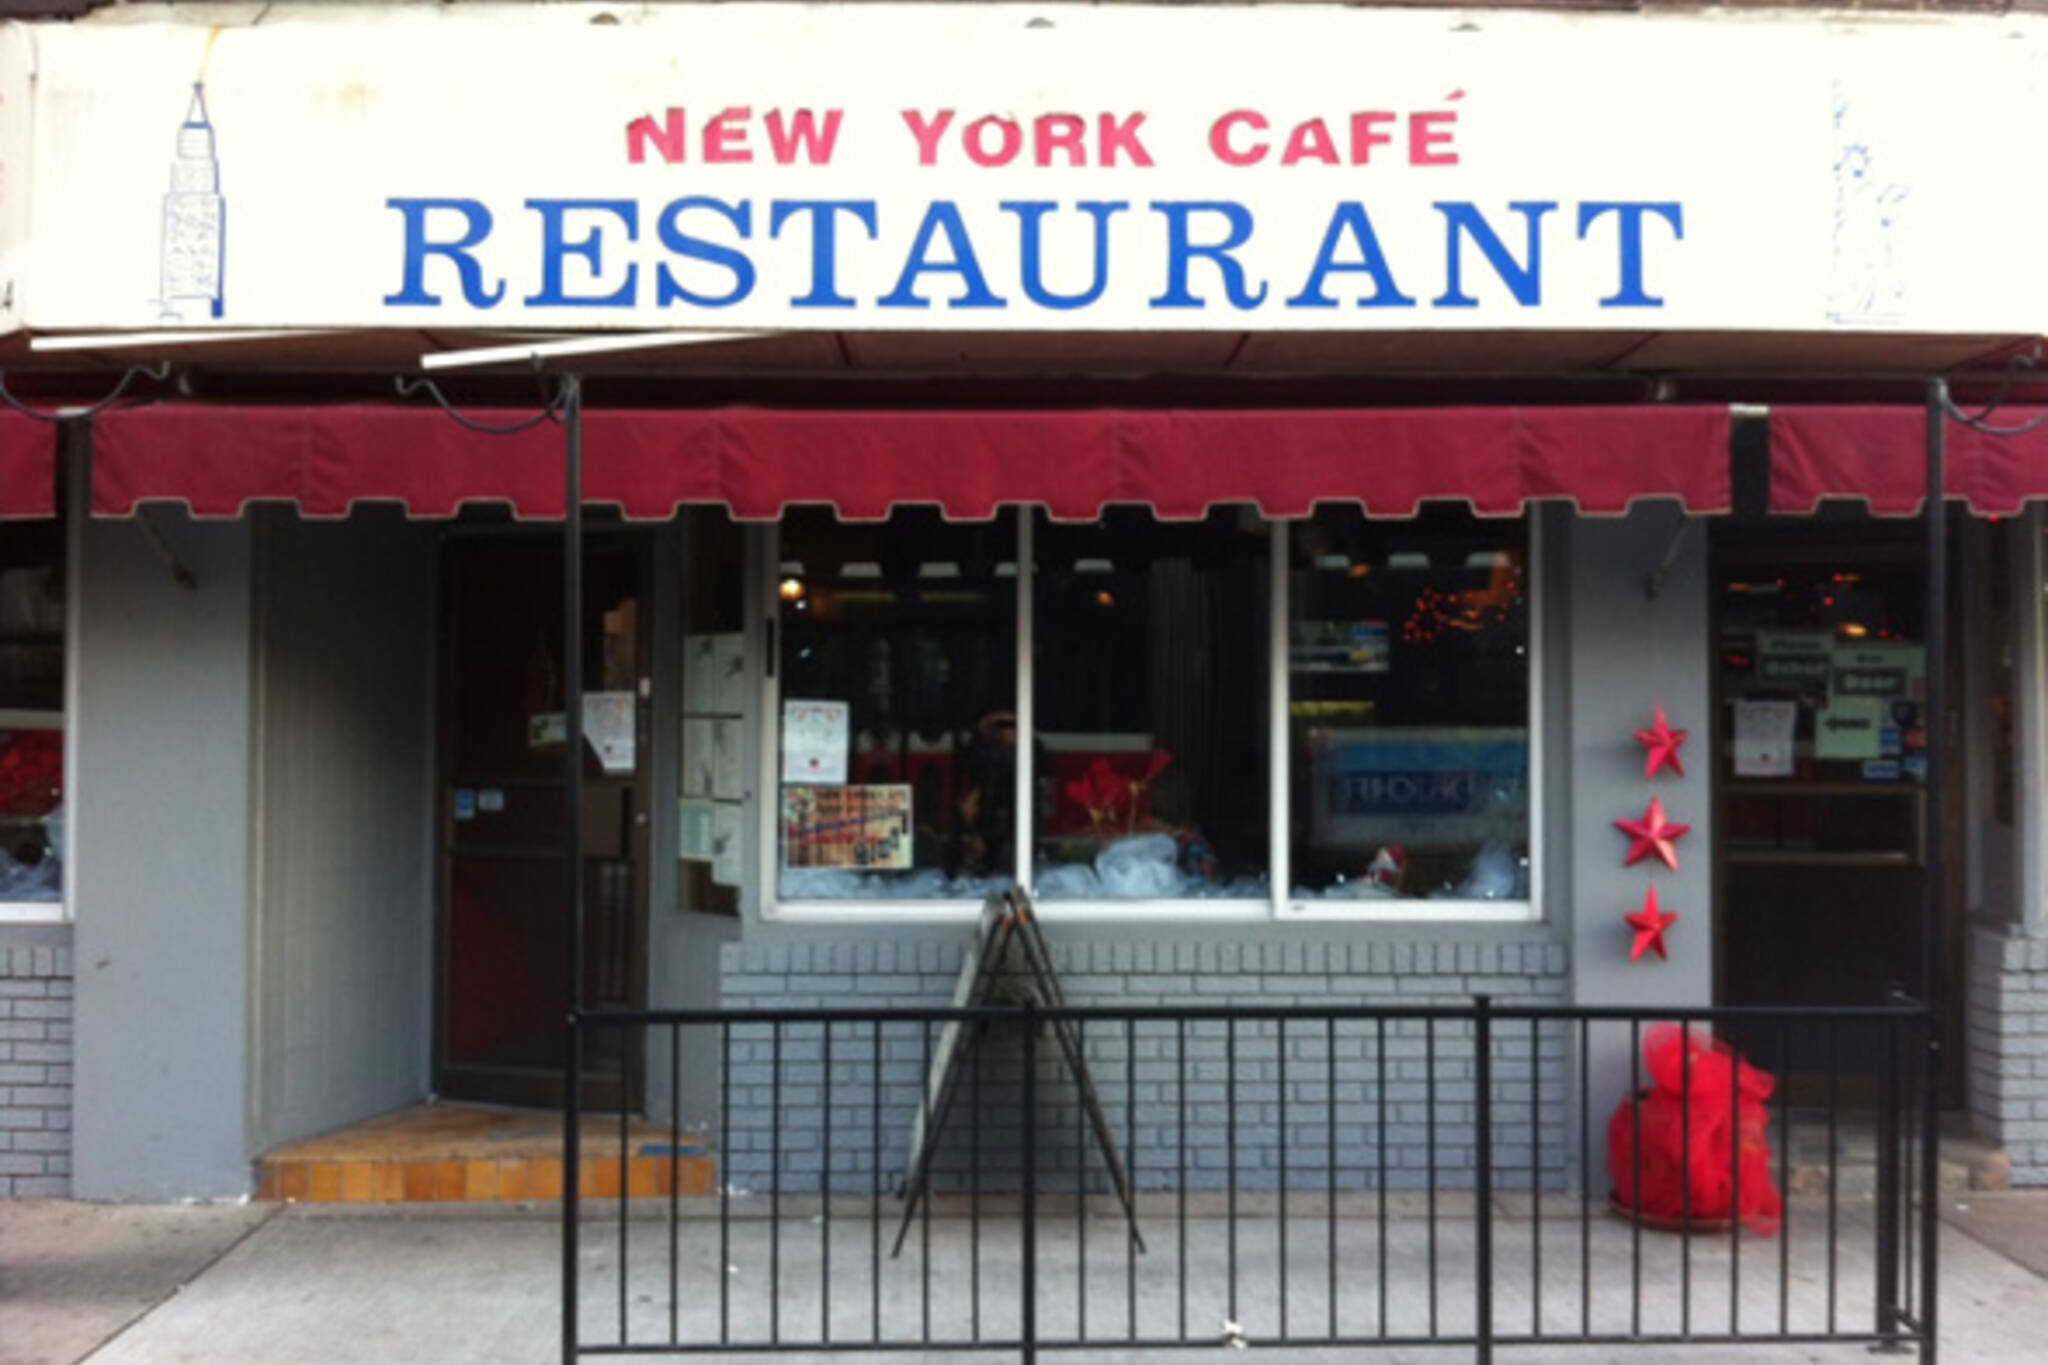 New York Cafe